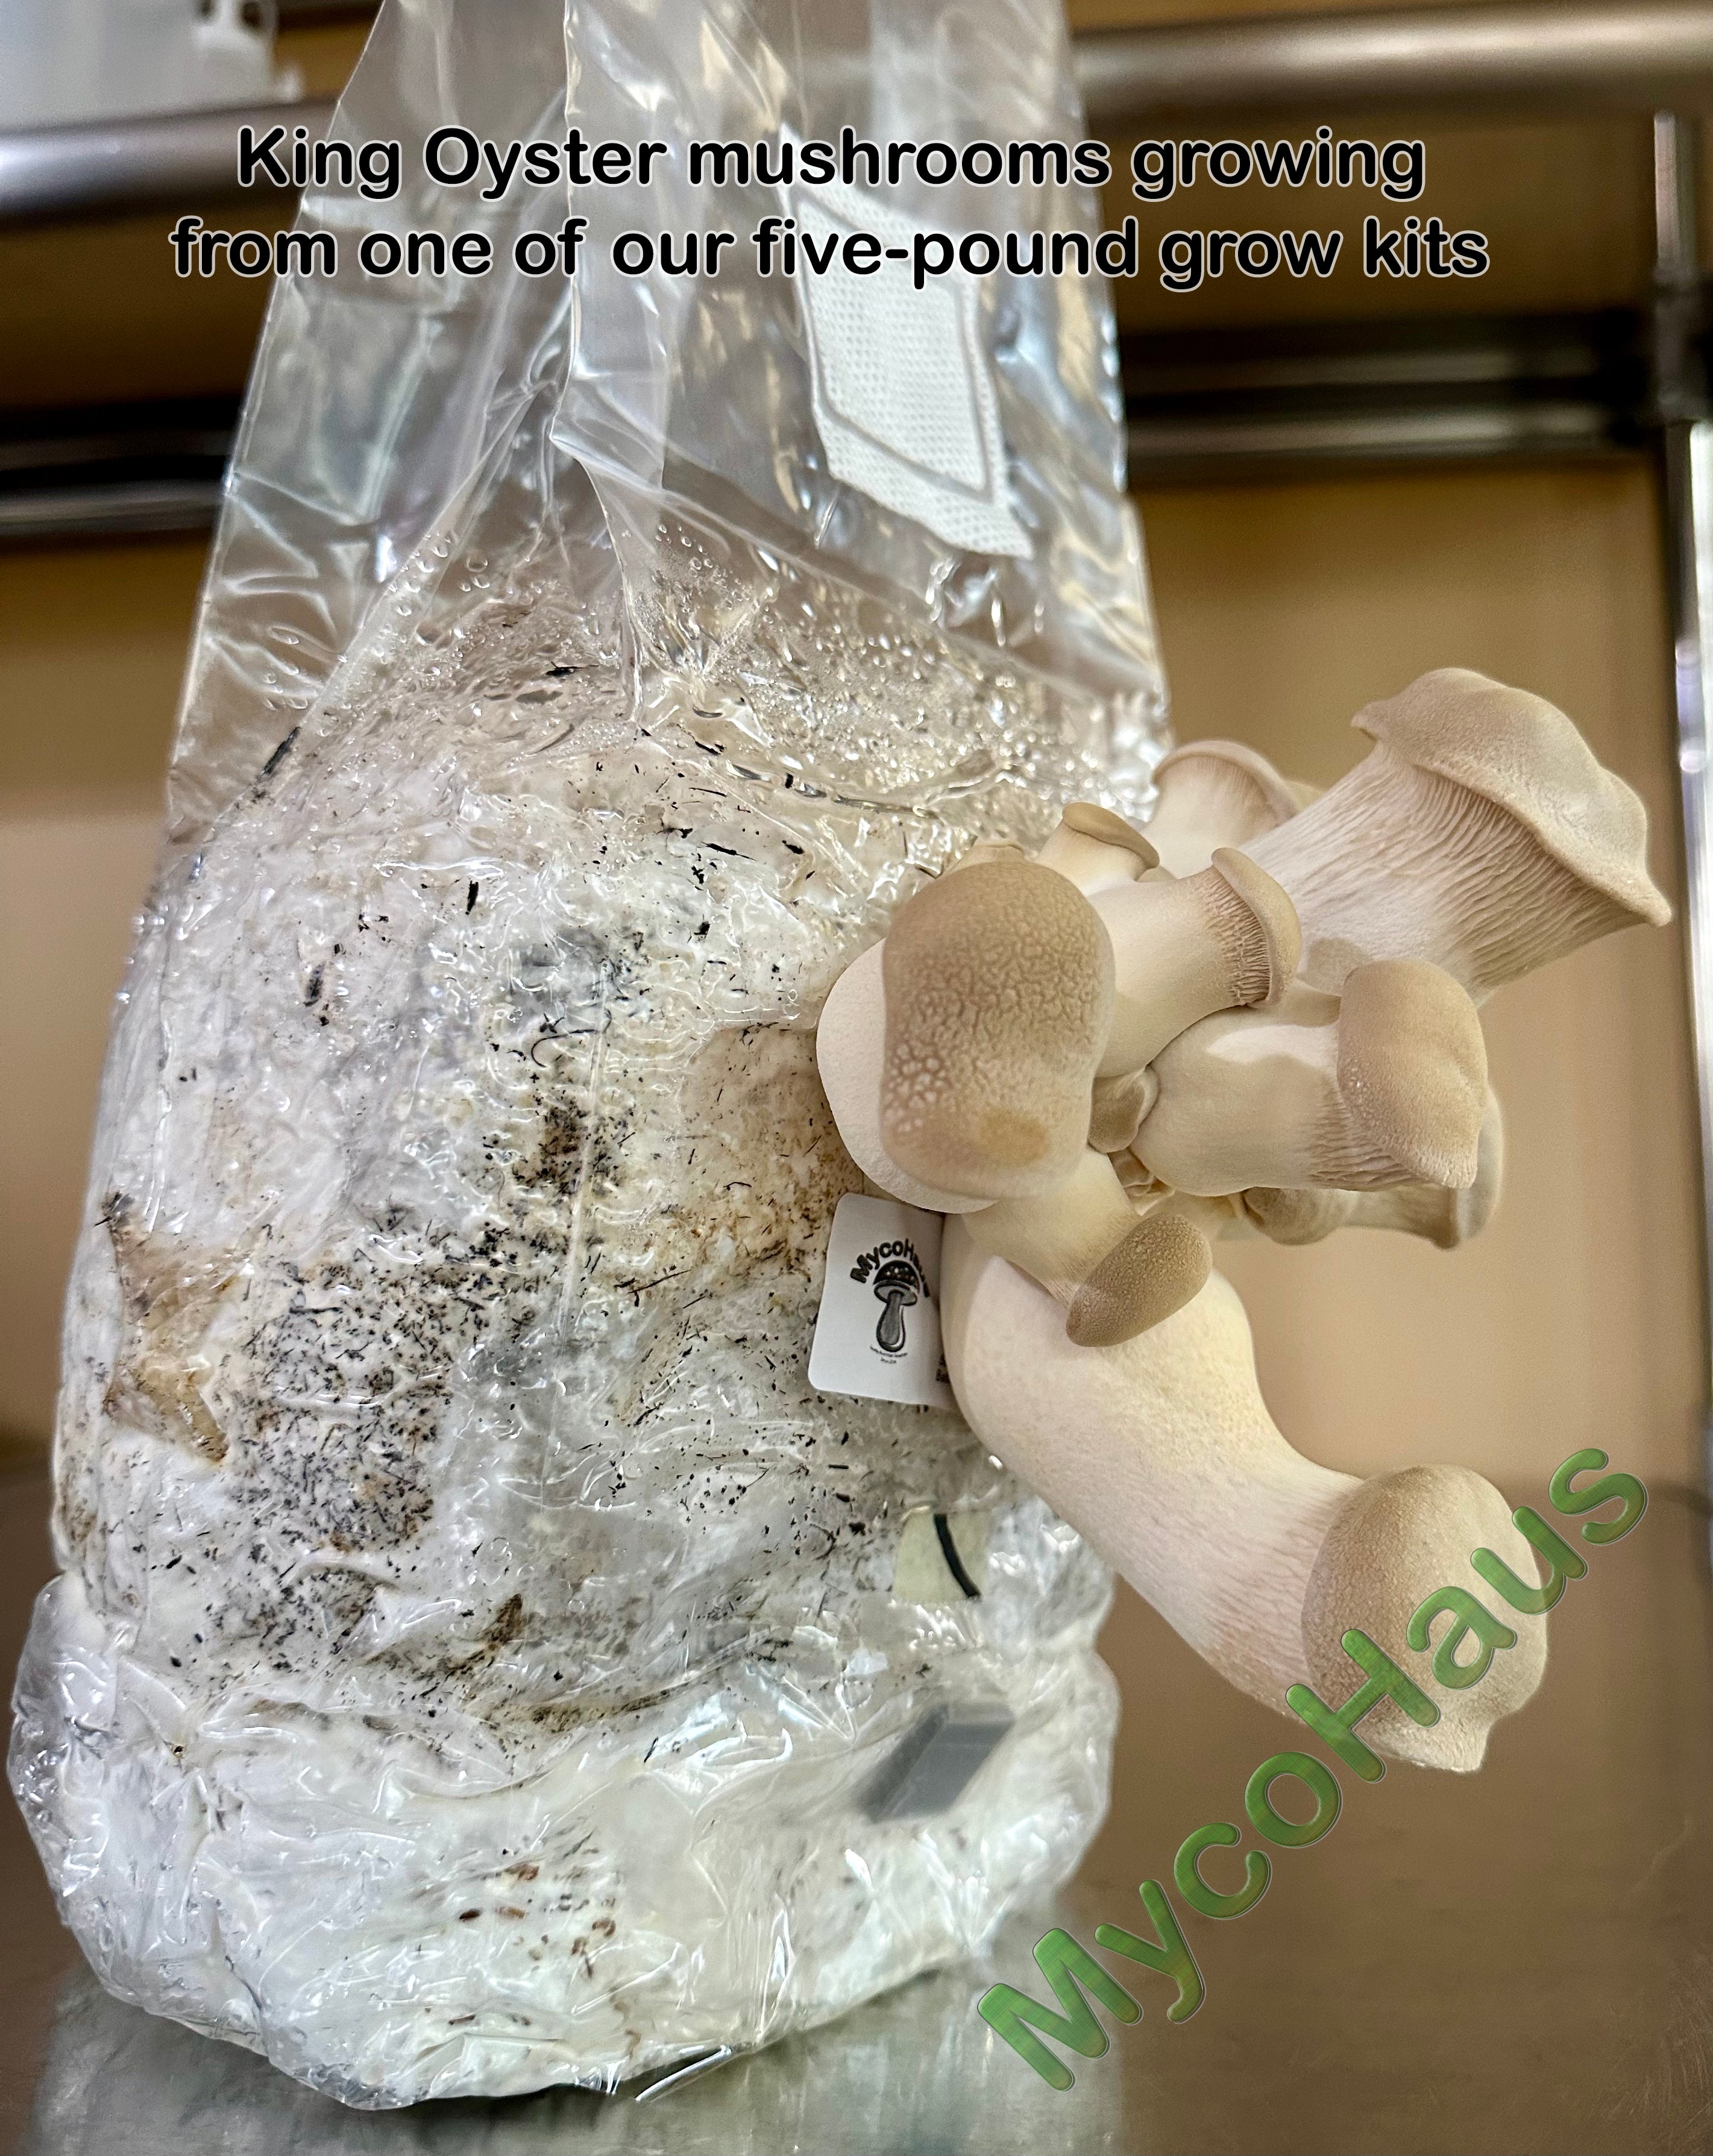 The Mushroom Grow Bag